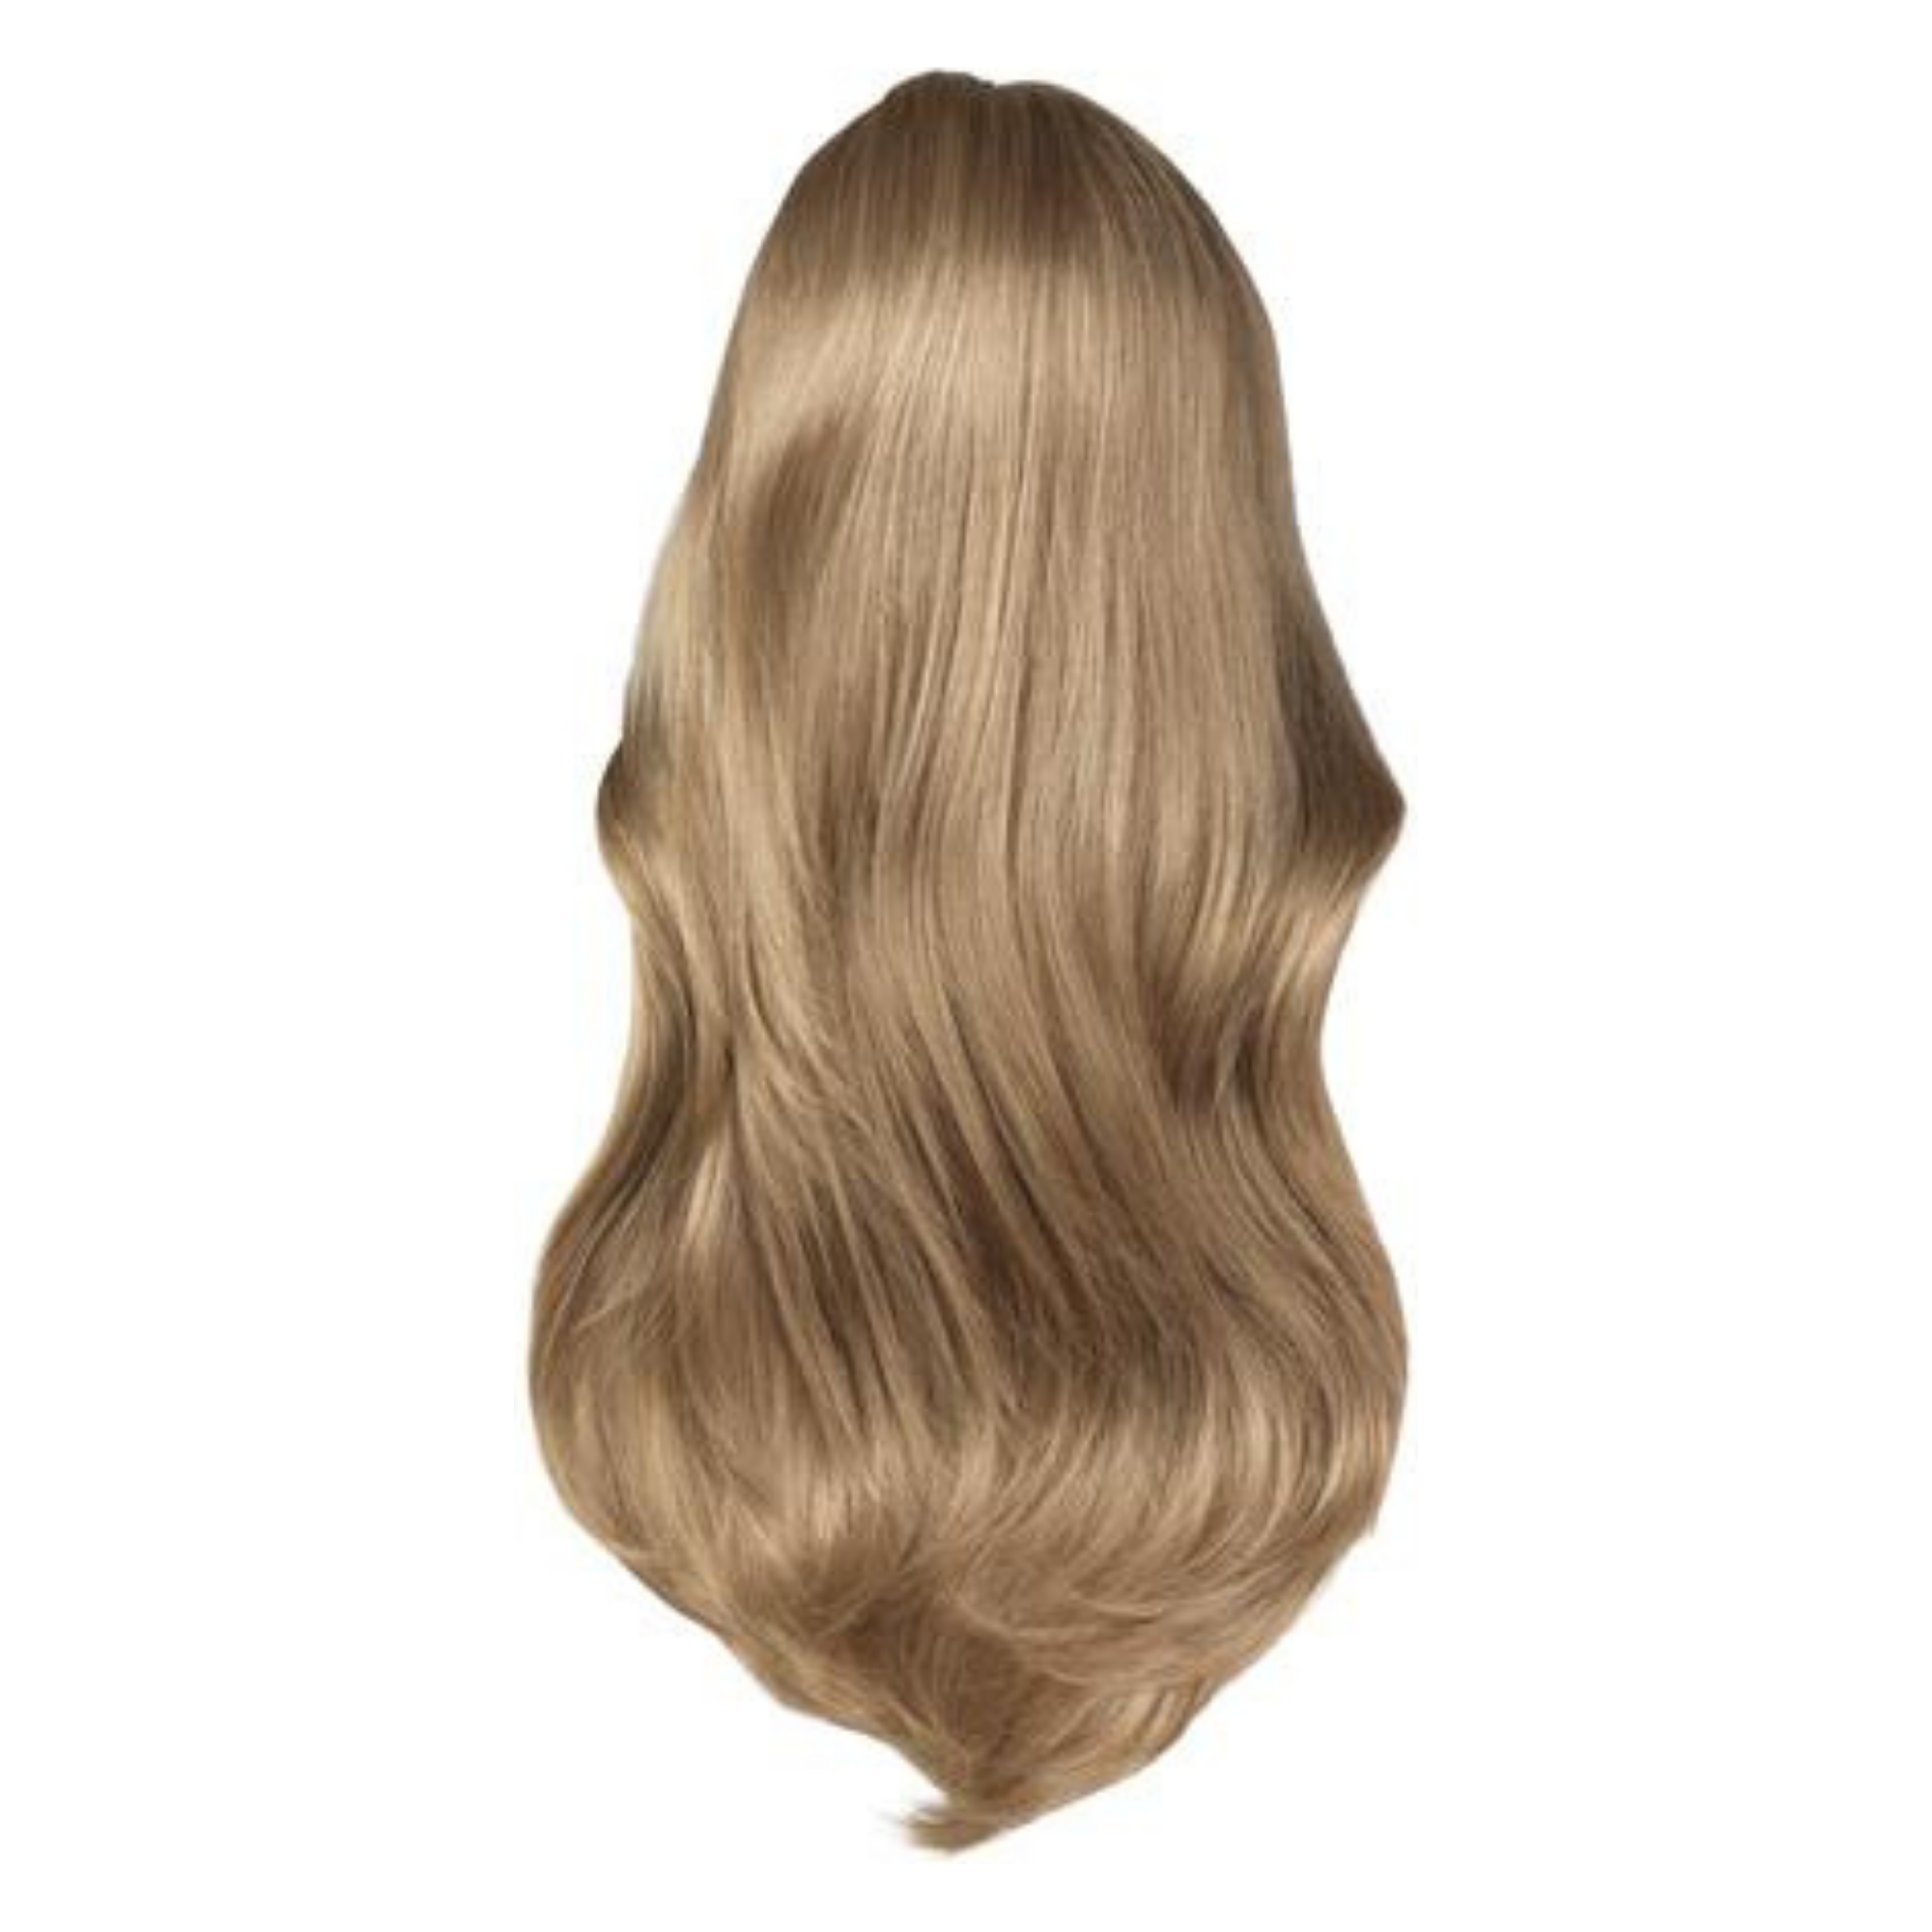 image of hair rehab london half wig hairpiece in shade sandy